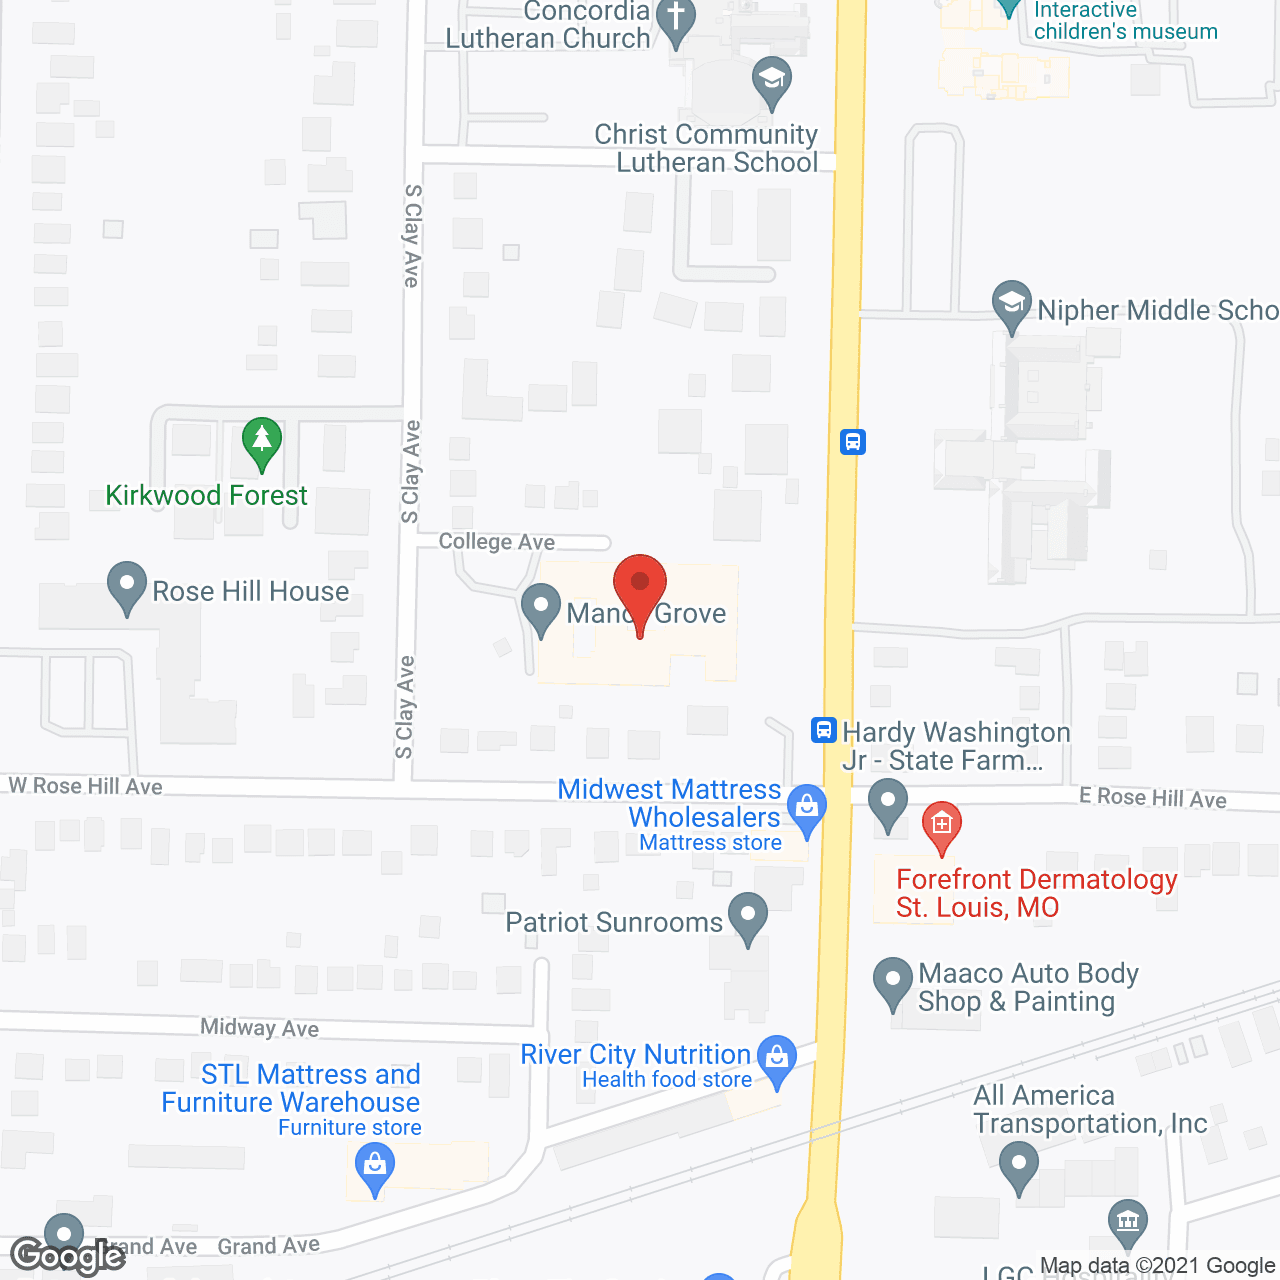 Manor Grove in google map